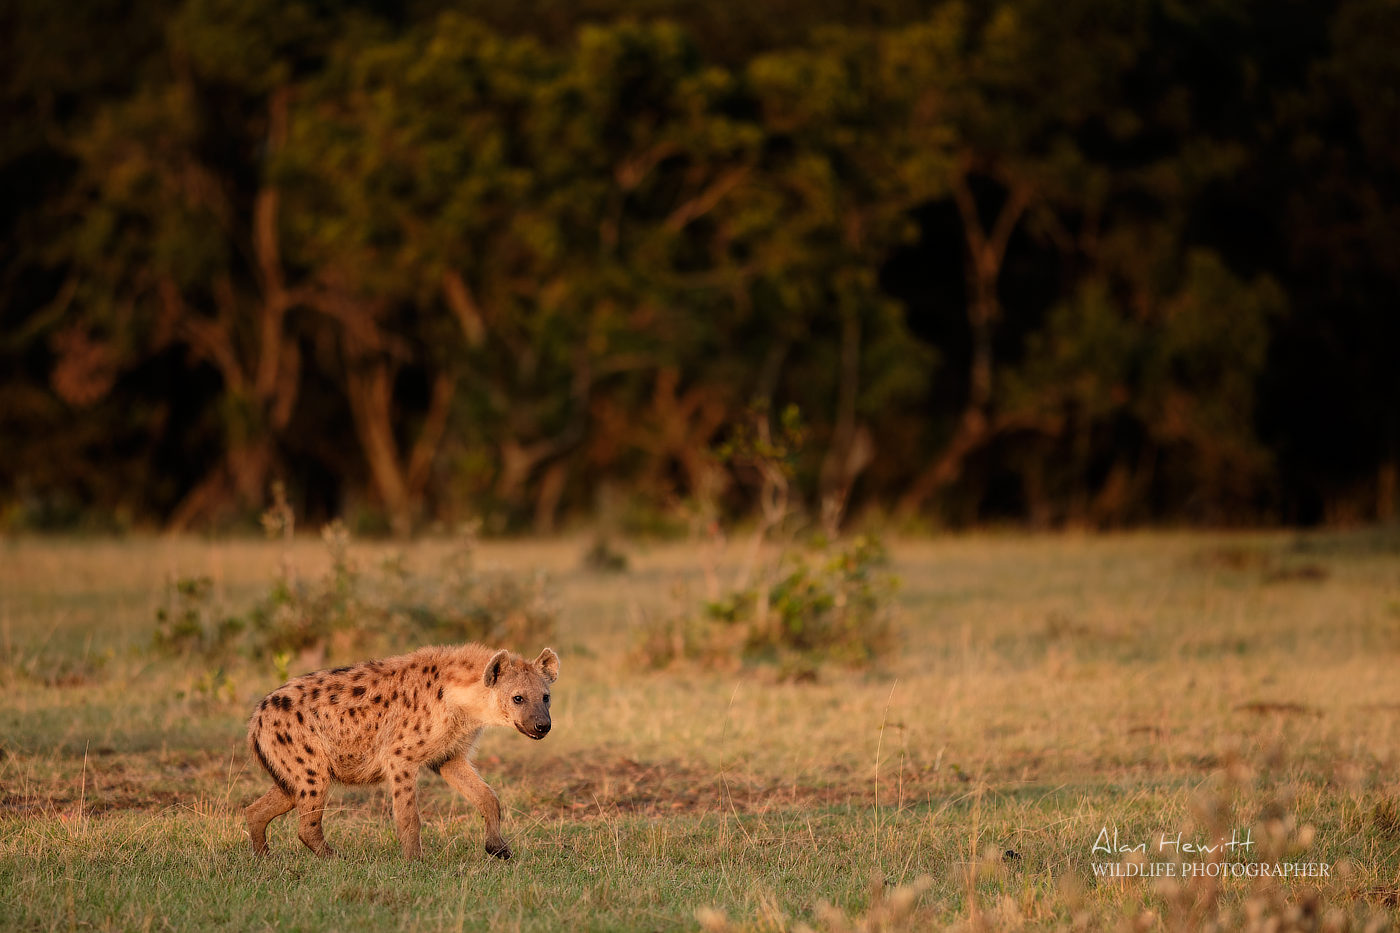 Spotted Hyena Alan Hewitt Photography